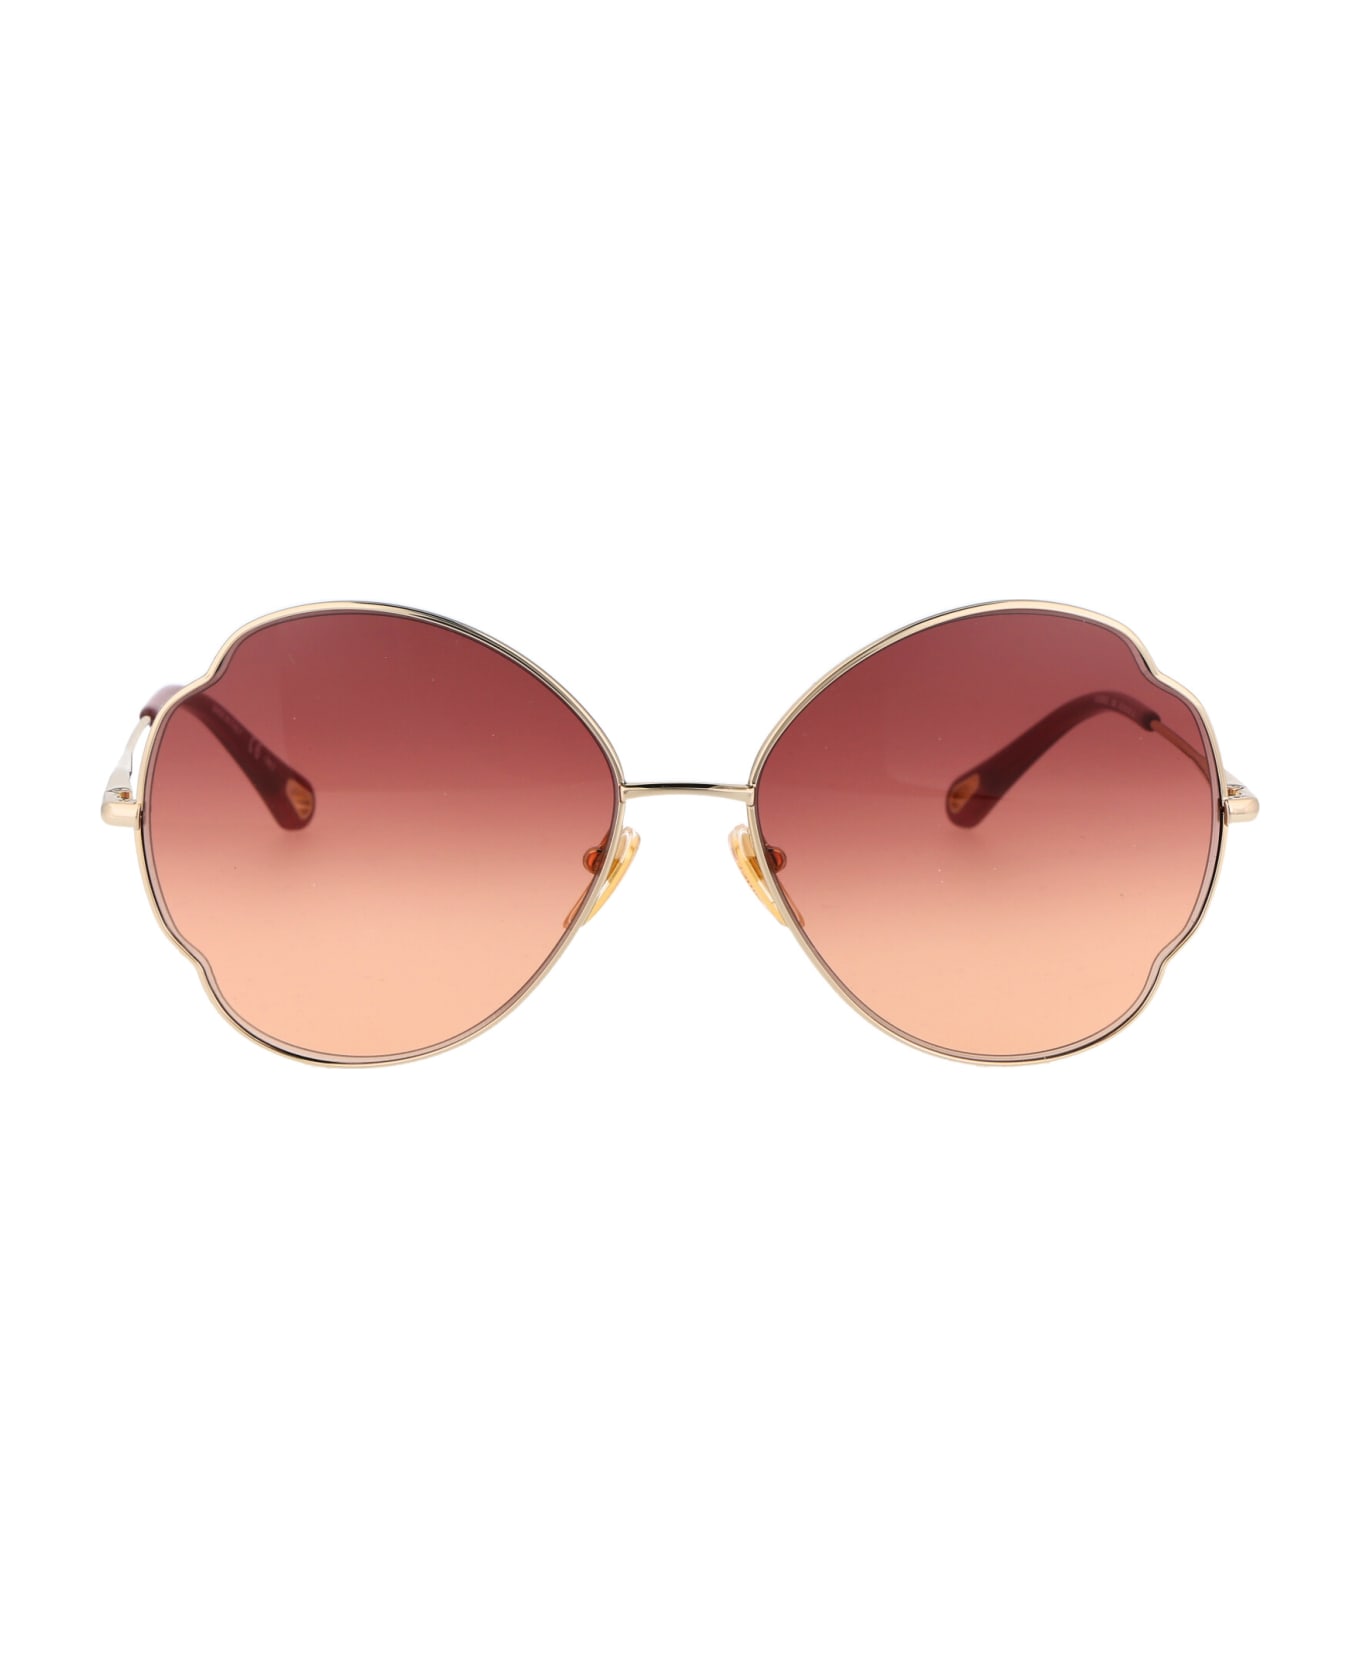 Chloé Eyewear Ch0093s Sunglasses - 004 GOLD GOLD RED